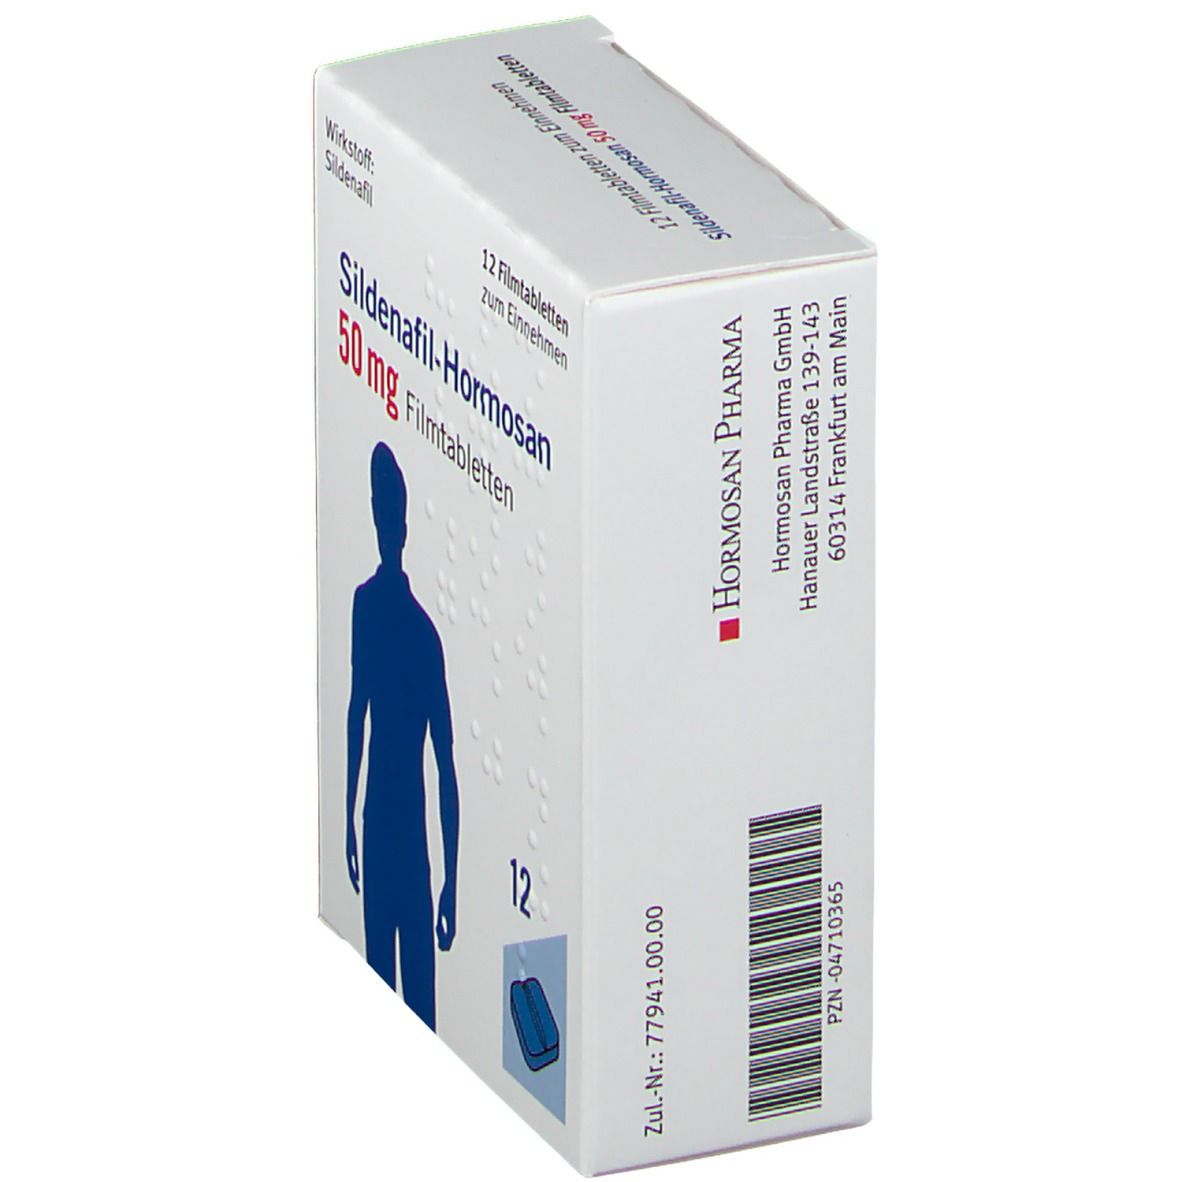 Sildenafil-Hormosan 50 mg